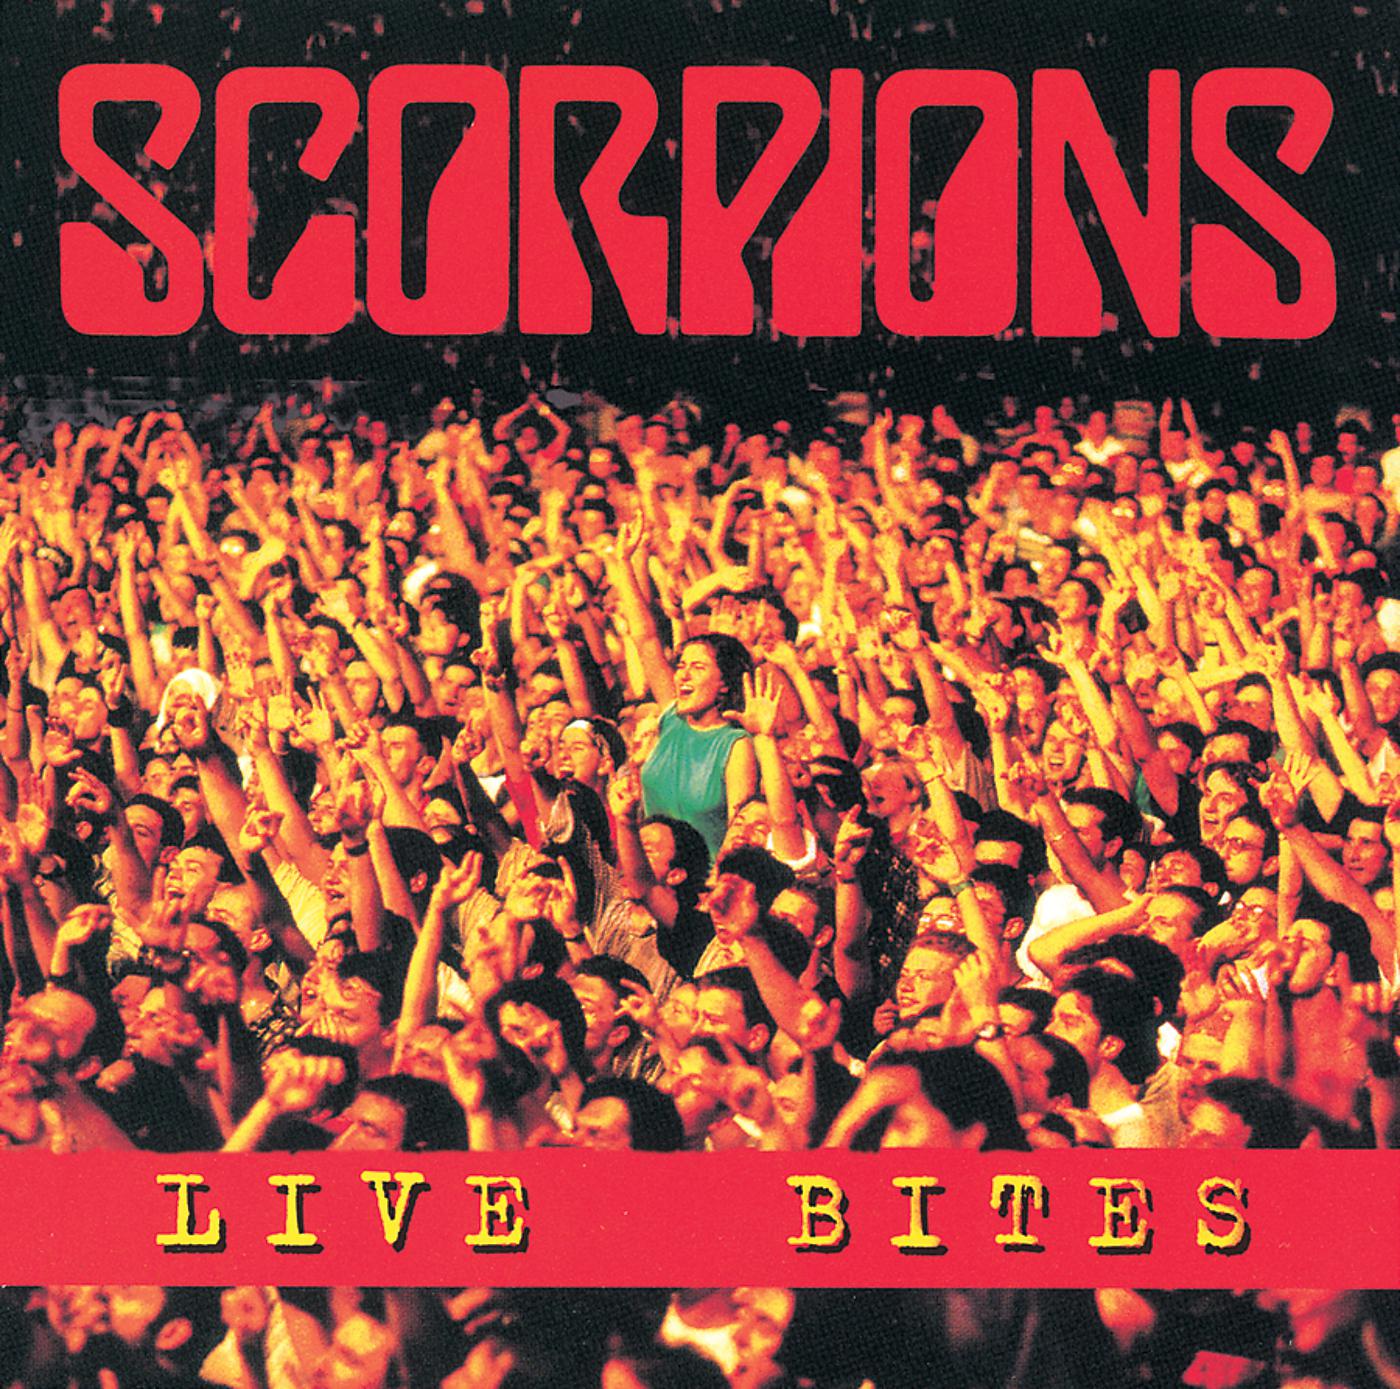 Scorpions - White Dove (Studio Track) Скачать Песню И Слушать.